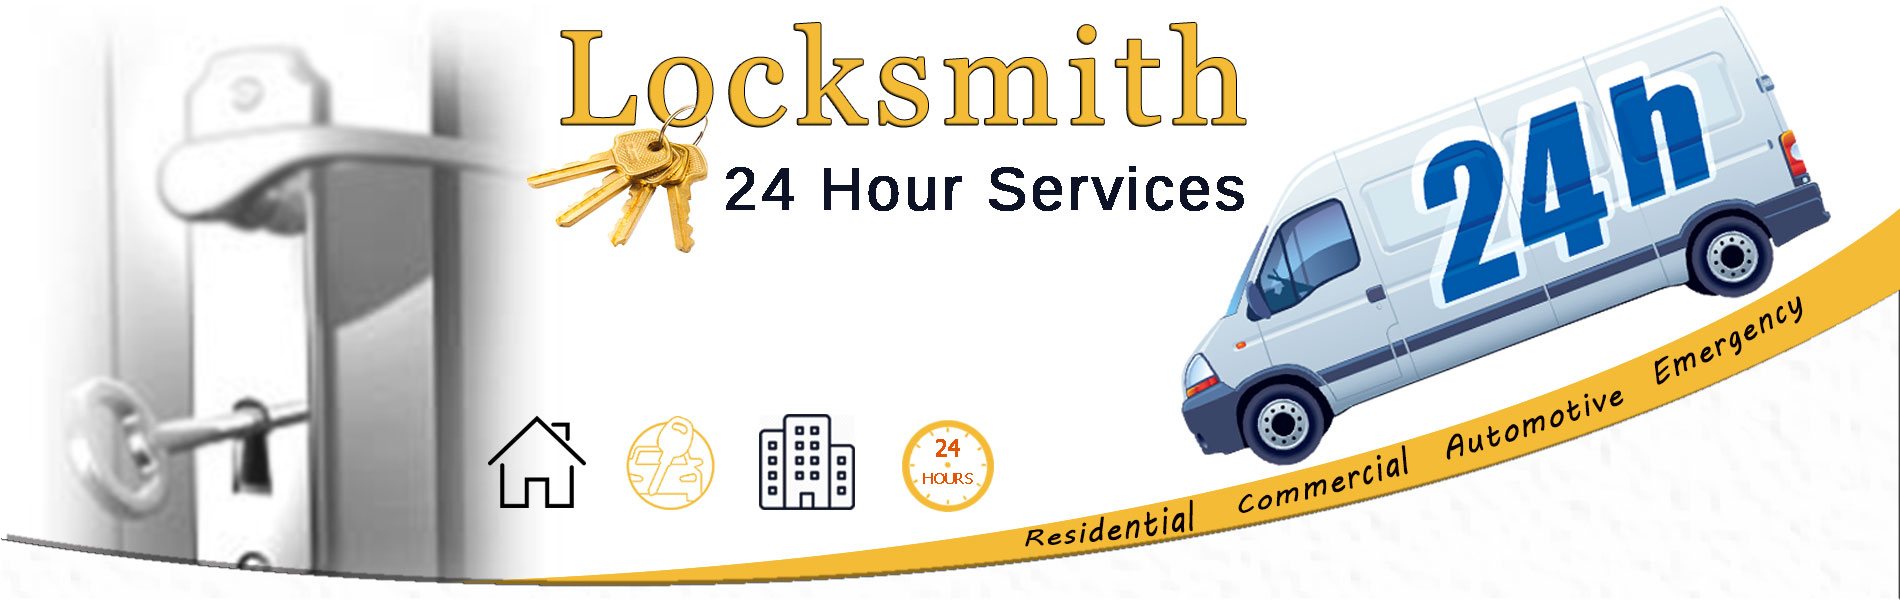 locksmith in jacksonville